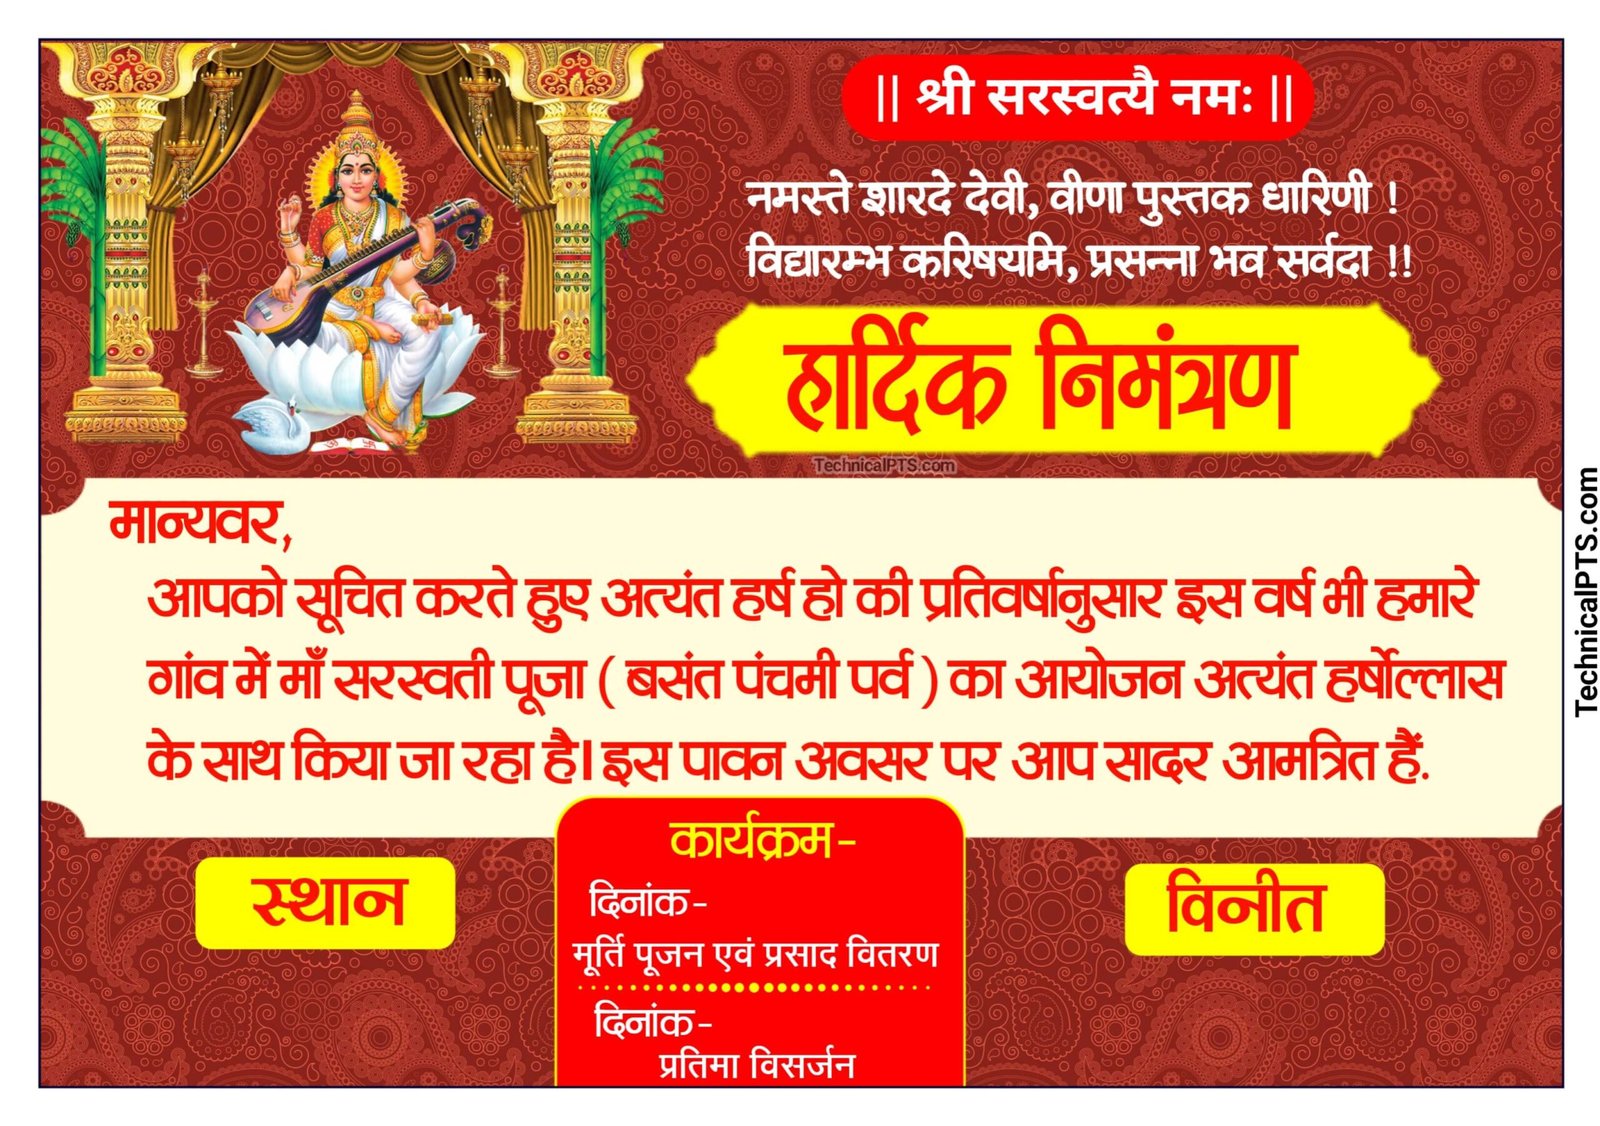 Saraswati Puja nimantran card Kaise banaen mobile se| Saraswati Puja invitation card Kaise banaen| Saraswati Puja ka poster Kaise bane mobile se